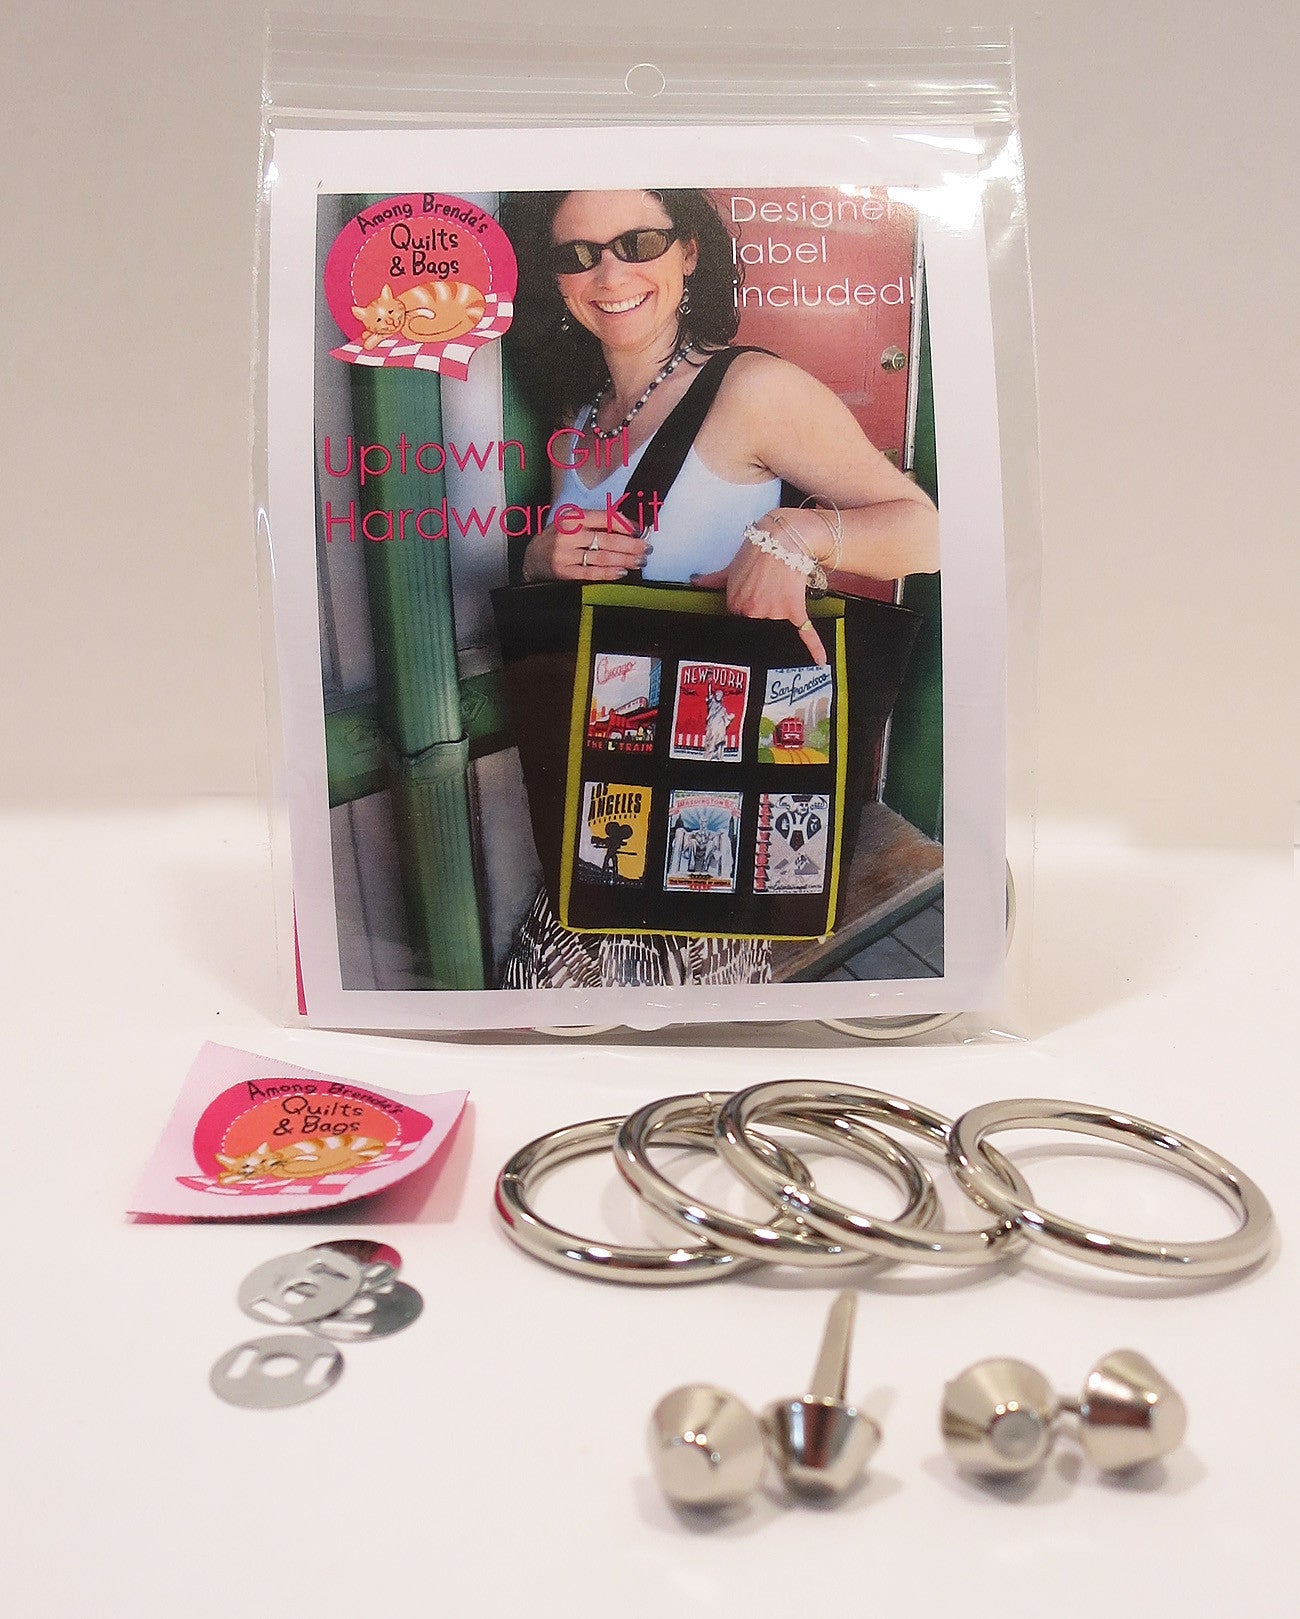 Bag Hardware Kit, Uptown Girl Tote with designer label